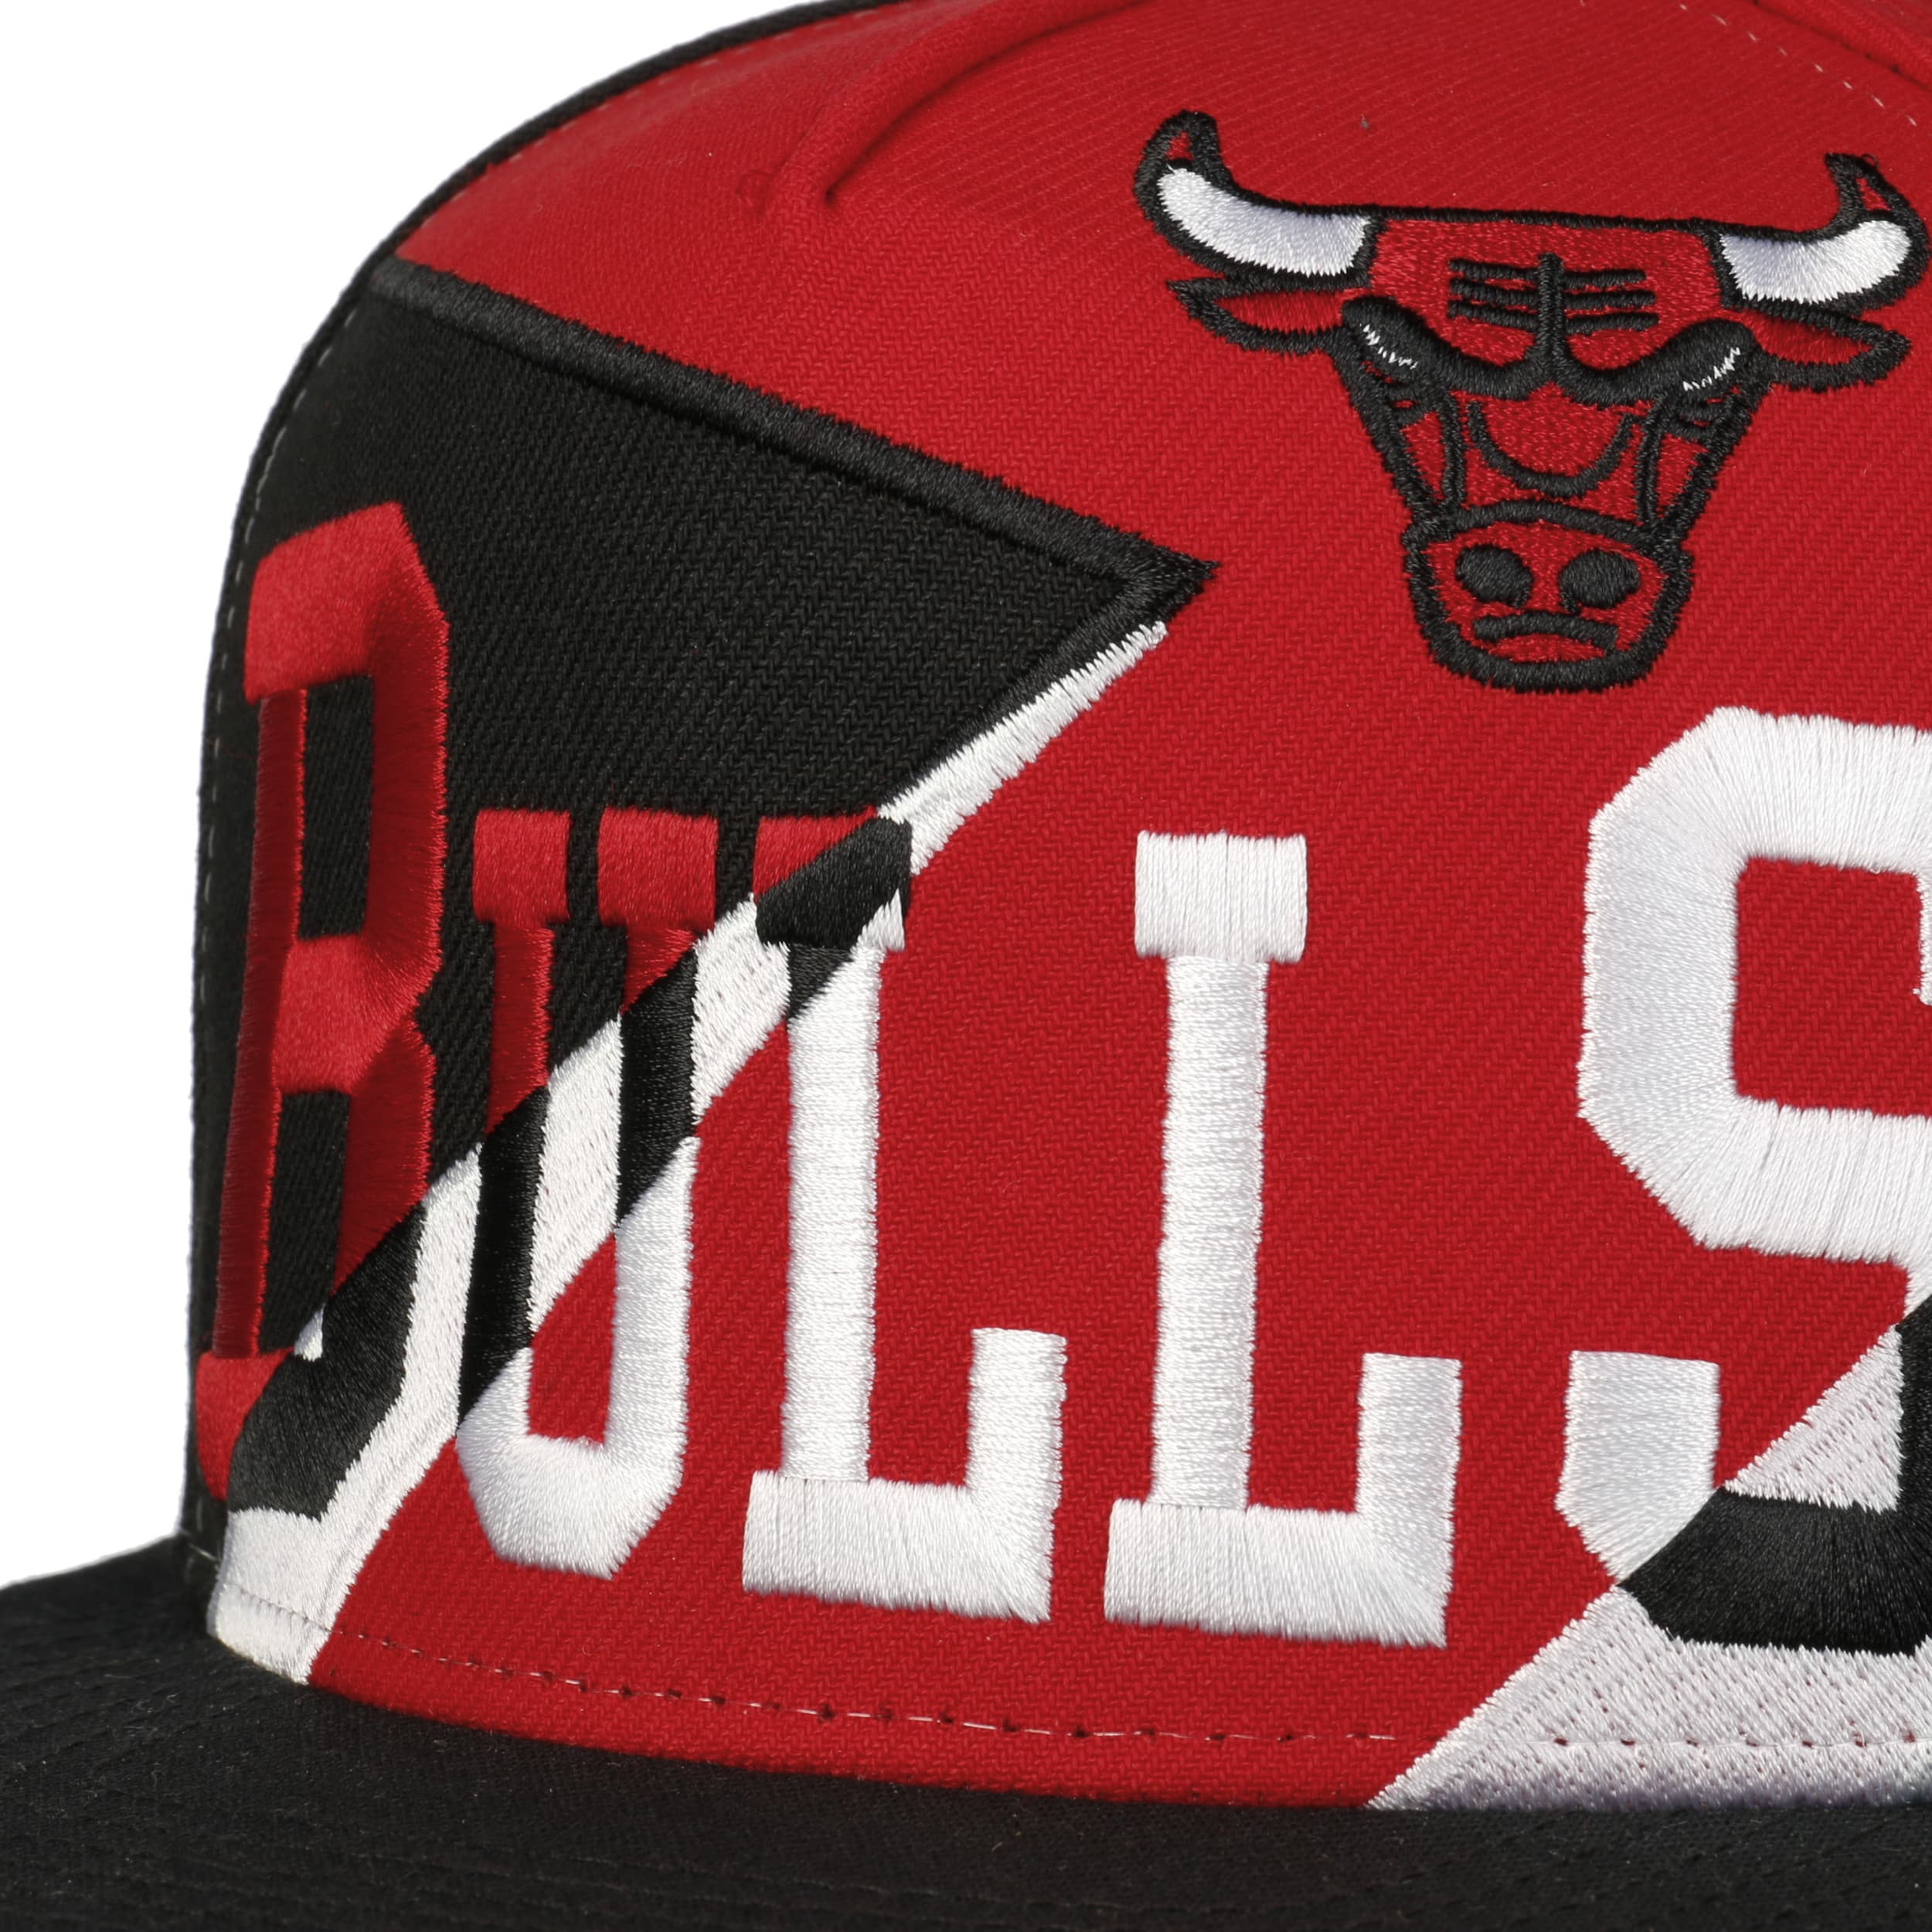 Multipli Chicago Bulls Cap by Mitchell & Ness